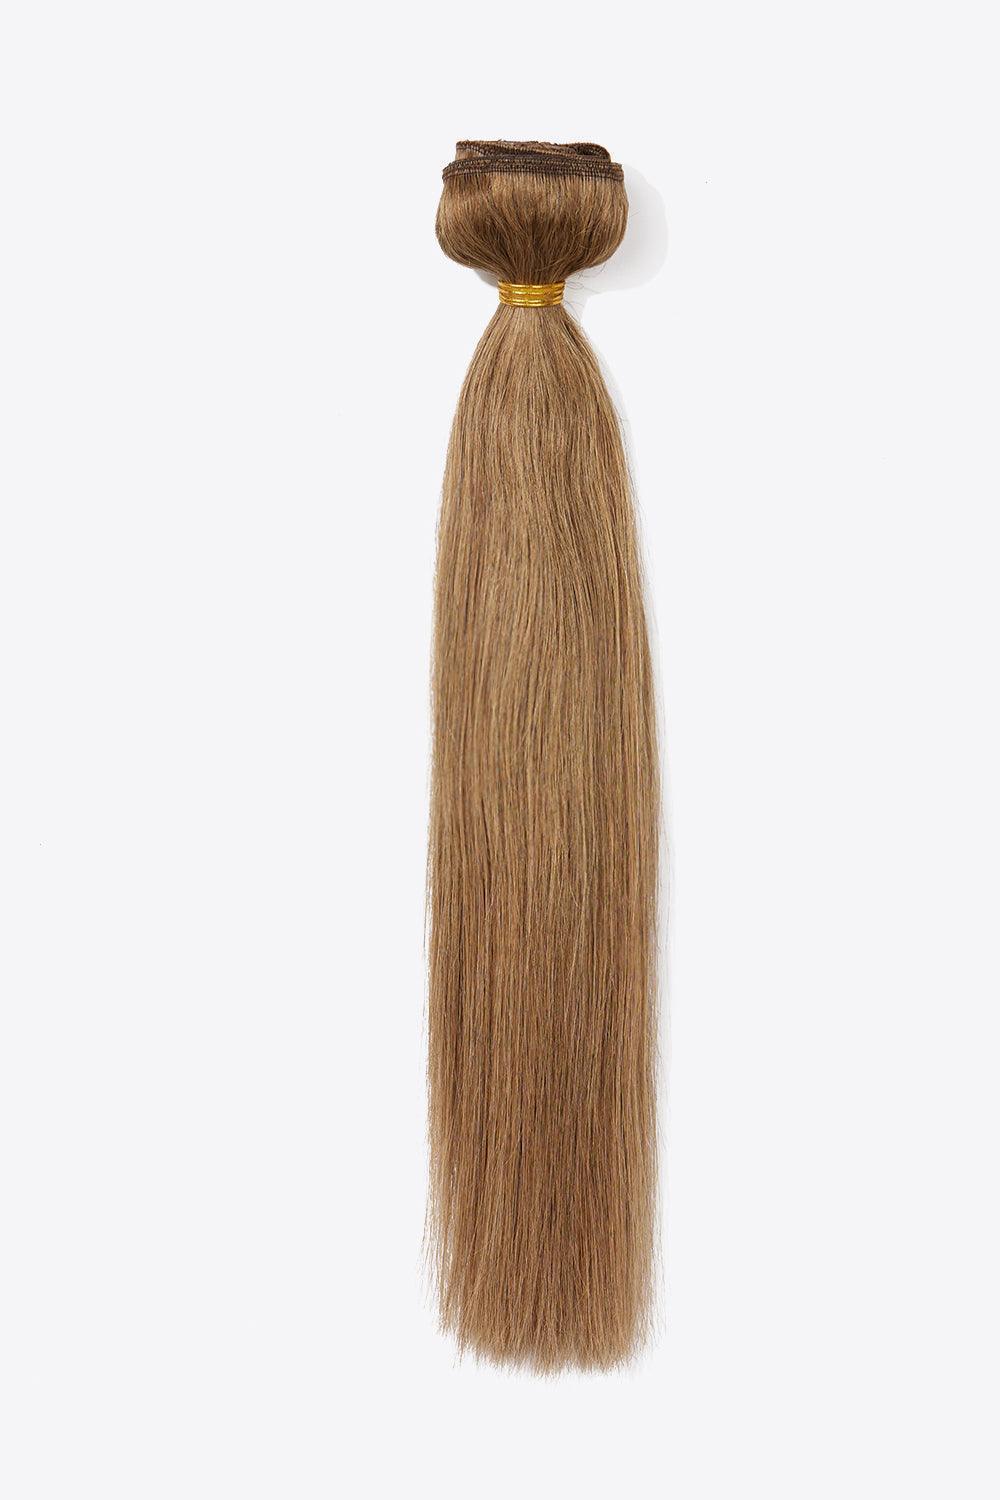 Clip-in Brazilian Virgin Remy Hair Extensions 18-Inch - MXSTUDIO.COM